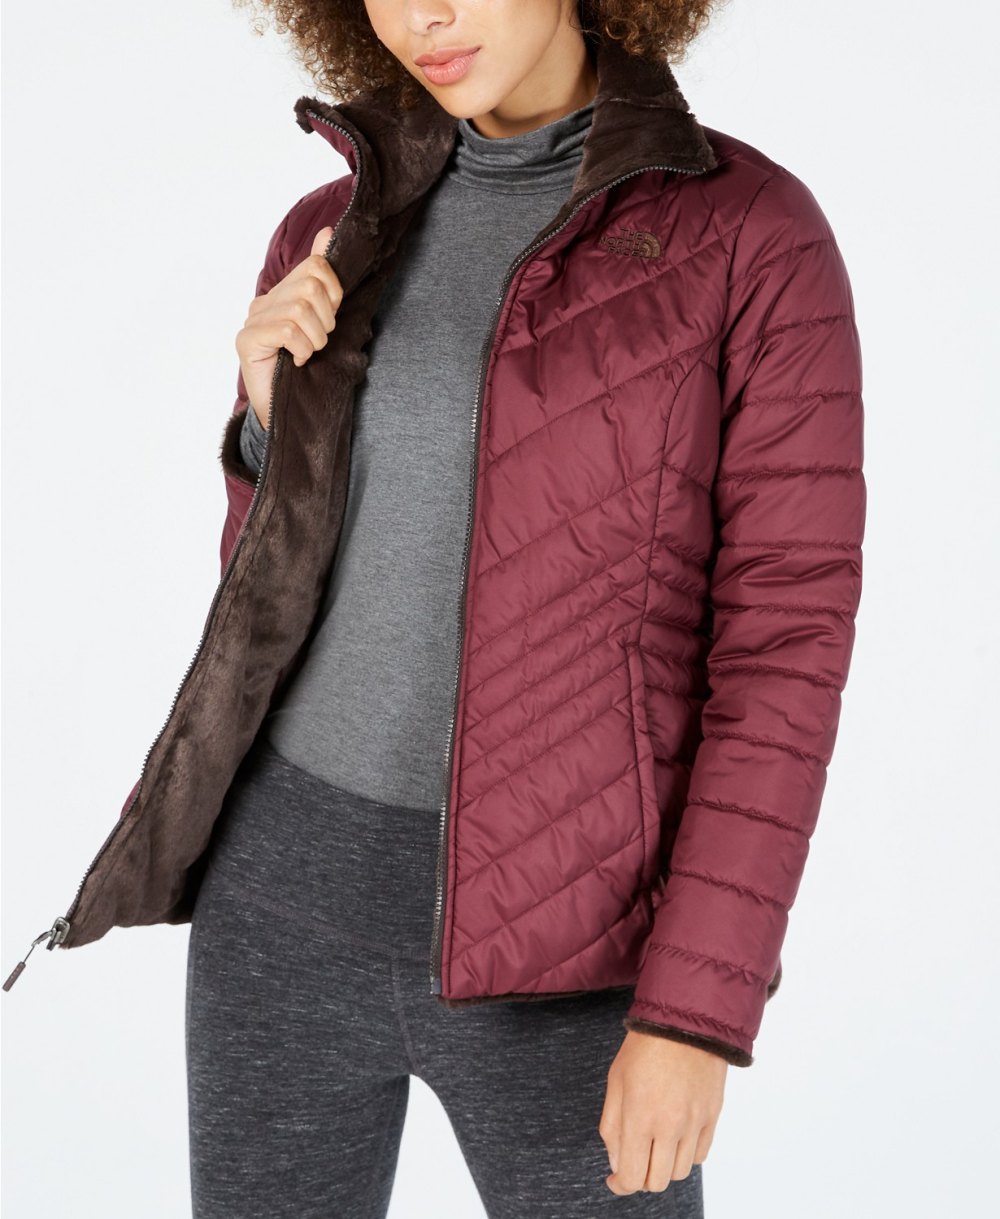 north face fleece lined reversible jacket macys sale